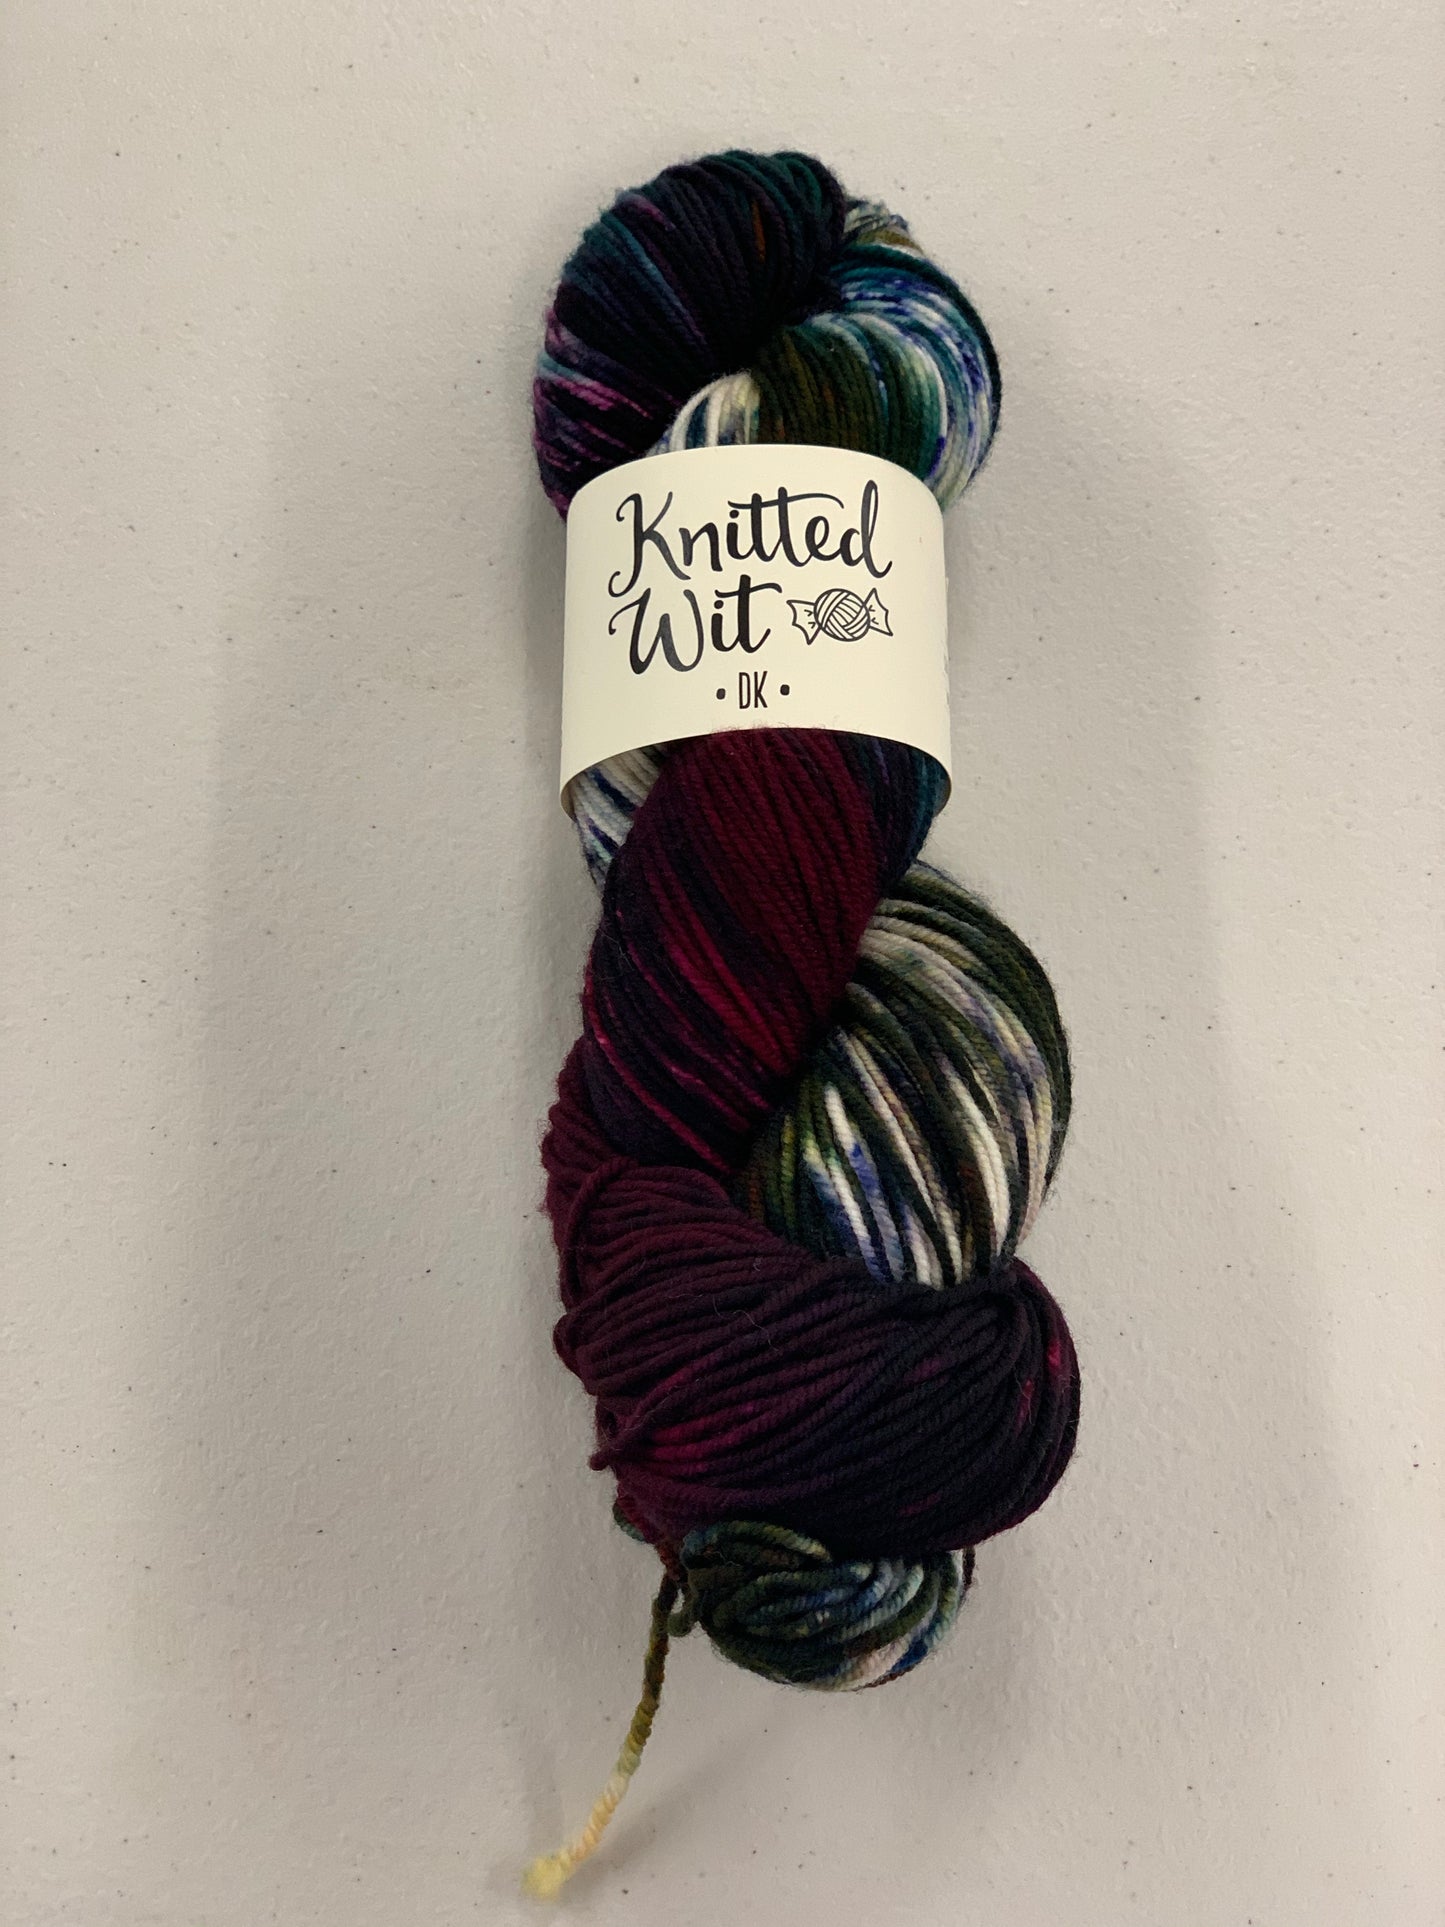 Knitted Wit DK Yarn